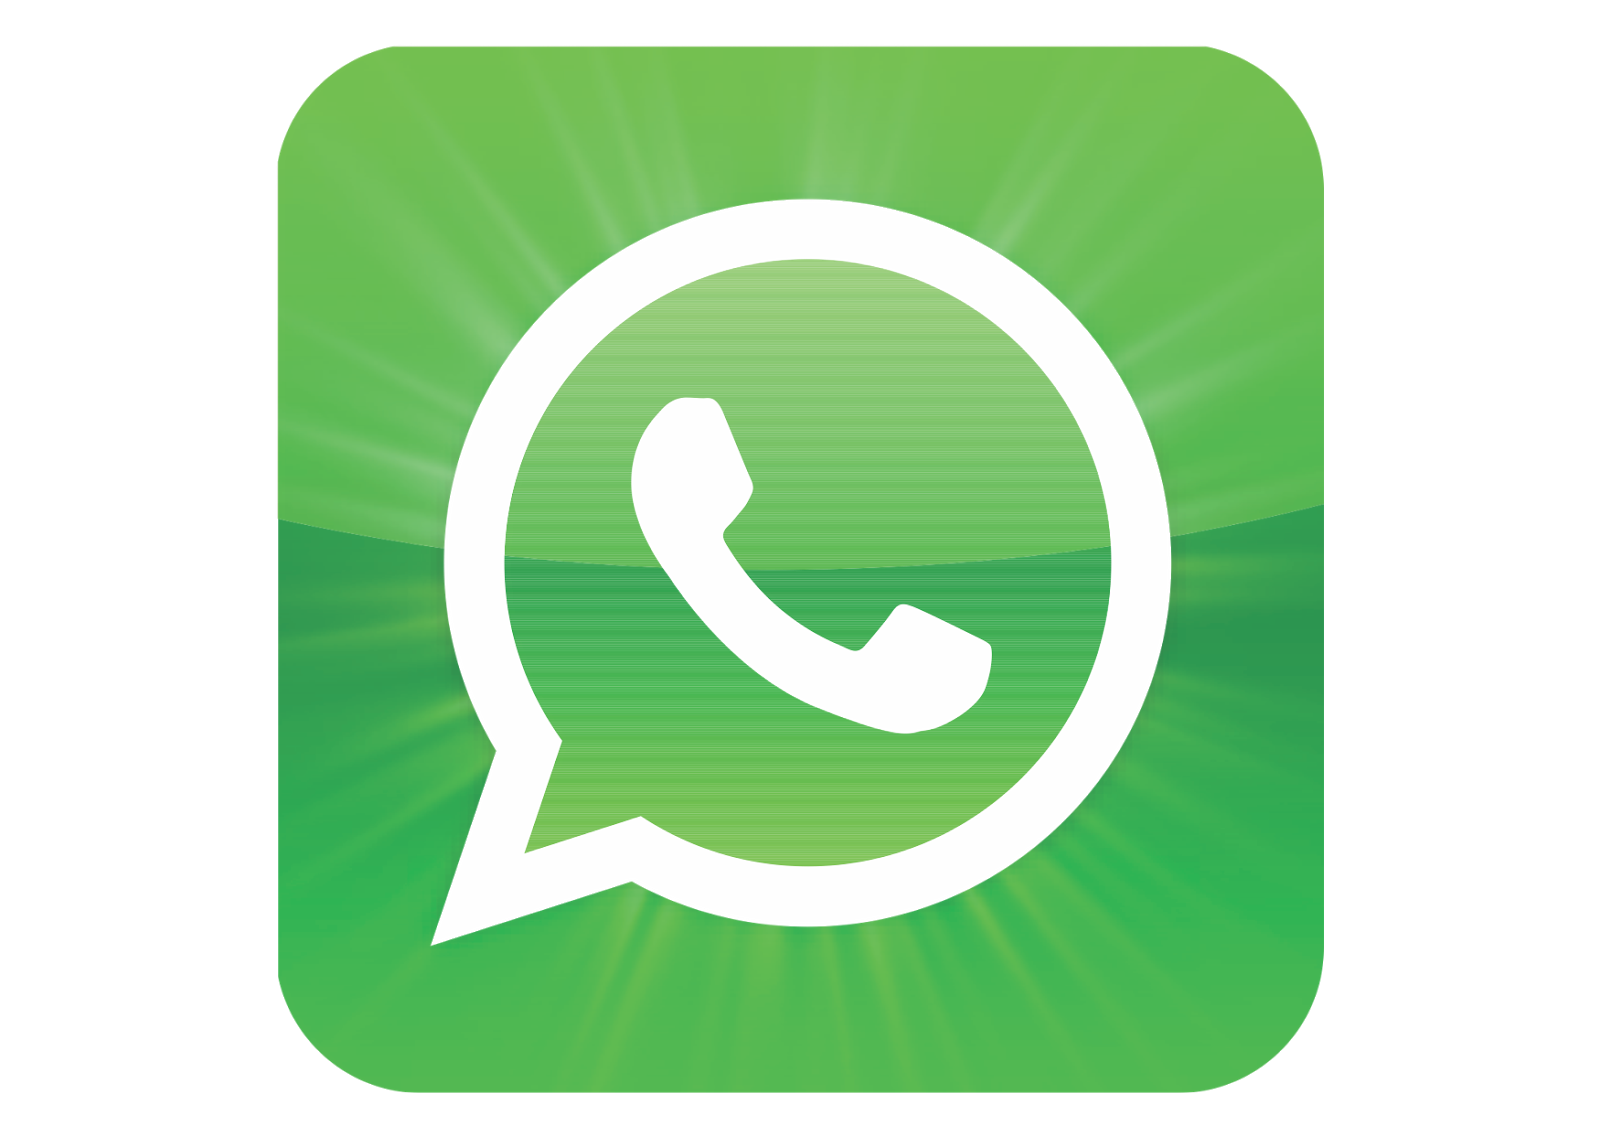 WhatsApp Logo Cdr - Whatsapp logo PNG png download - 1600*1136 - Free ...